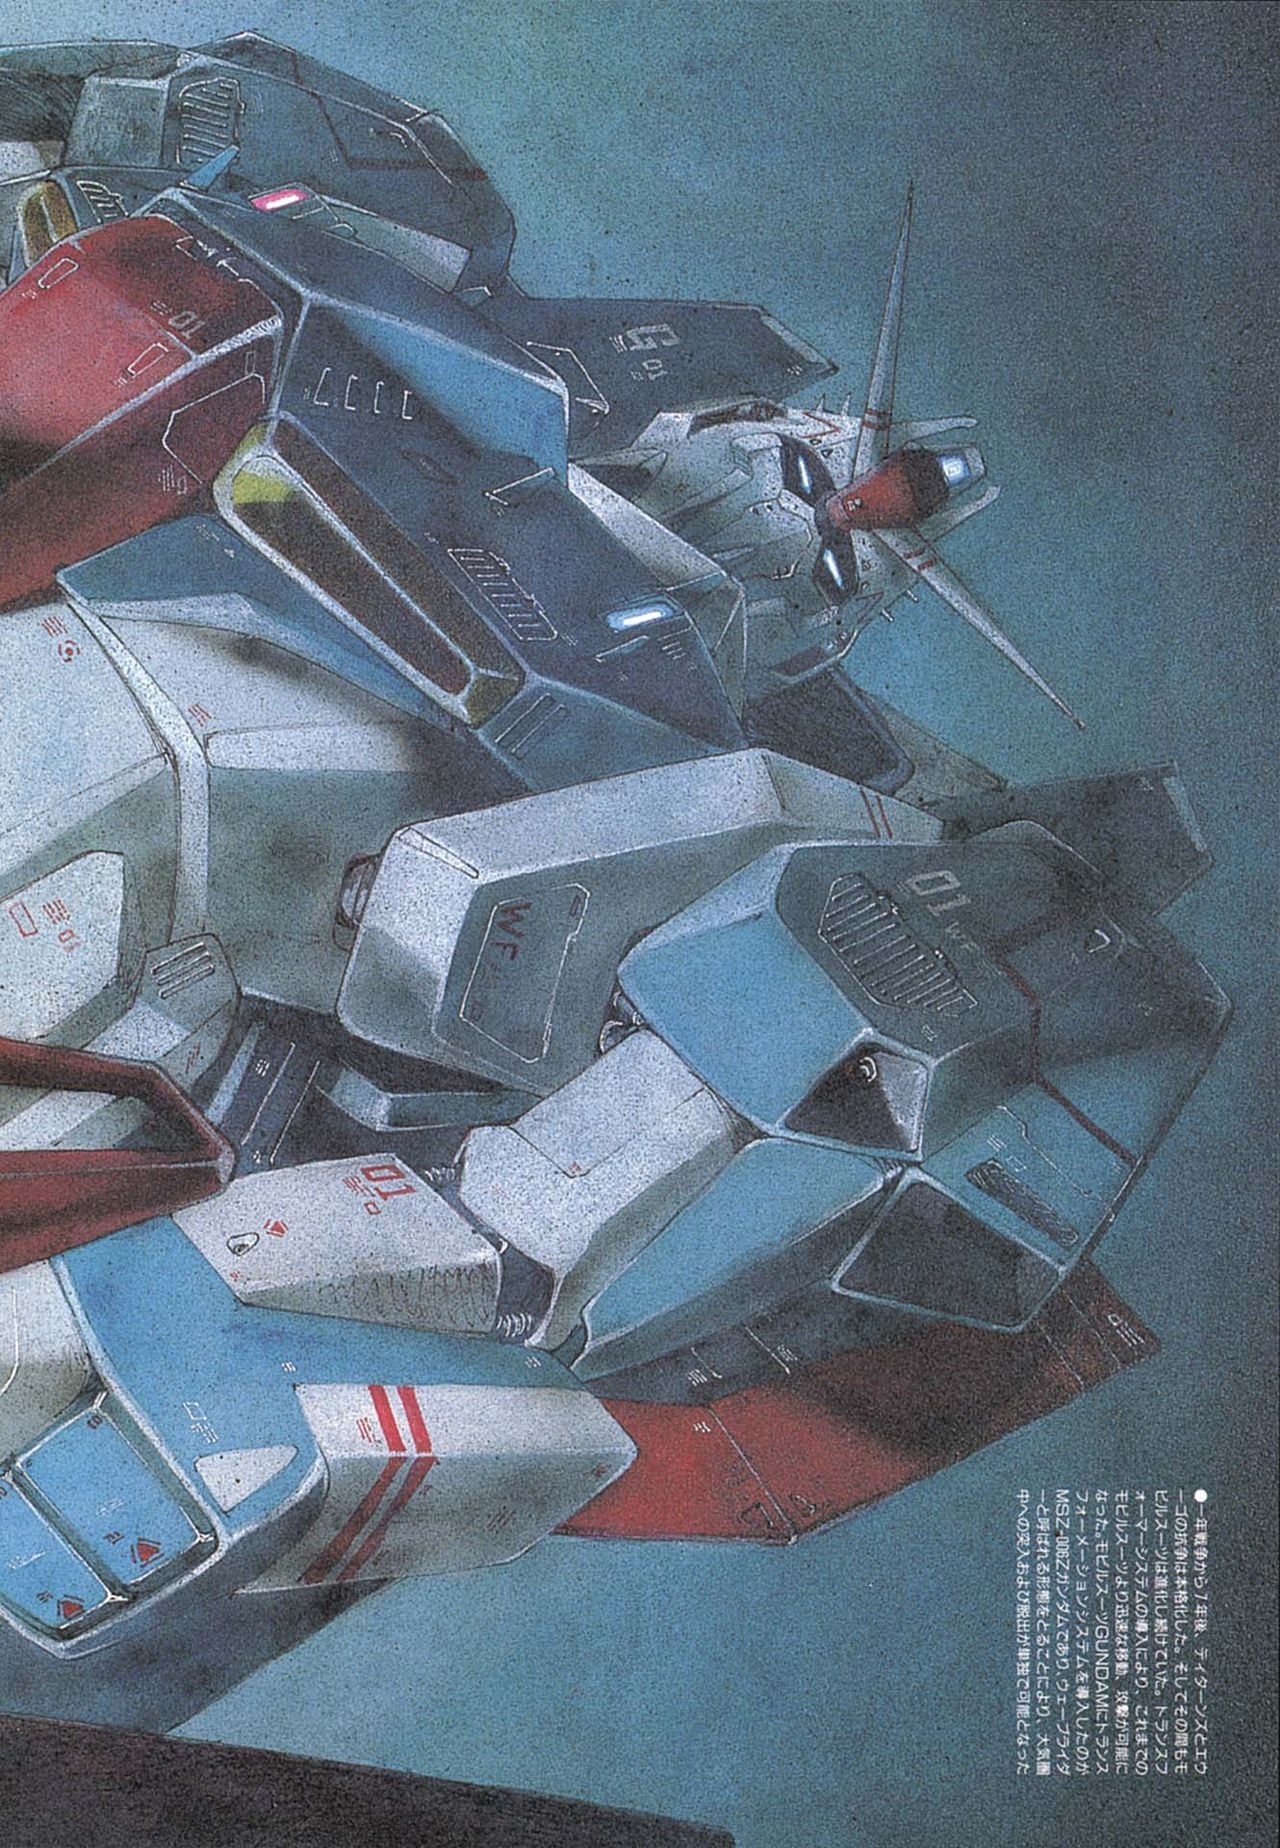 [Kazuhisa Kondo] Kazuhisa Kondo 2D & 3D Works - Go Ahead - From Mobile Suit Gundam to Original Mechanism 39